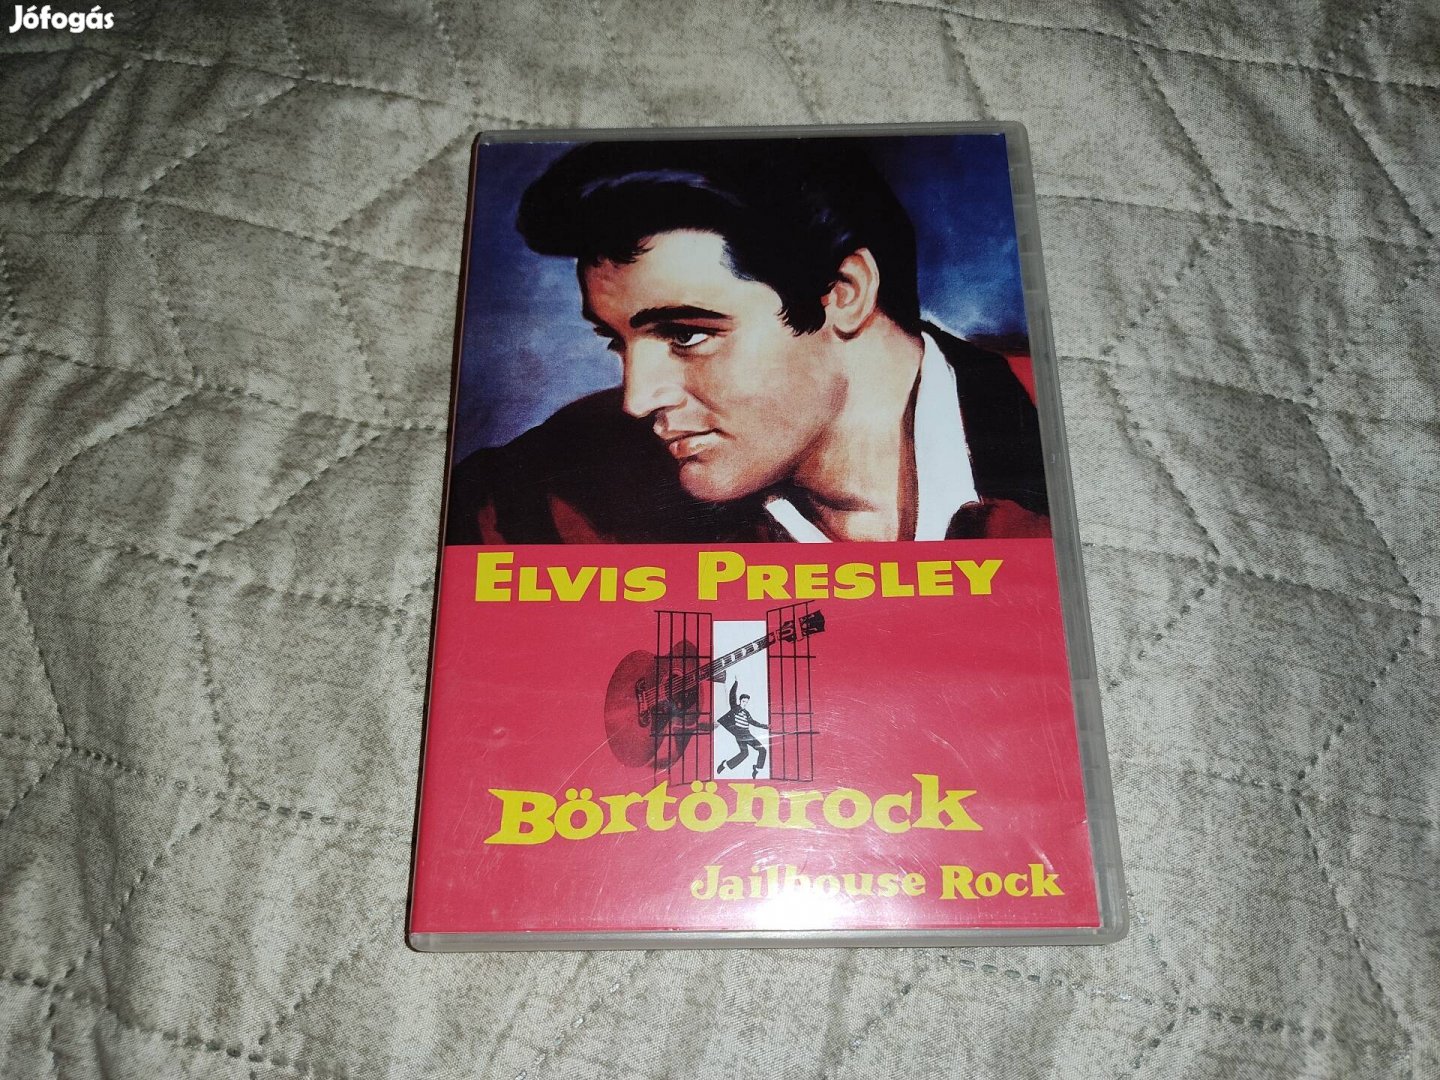 Börtönrock DVD (Elvis Presley)(1967)